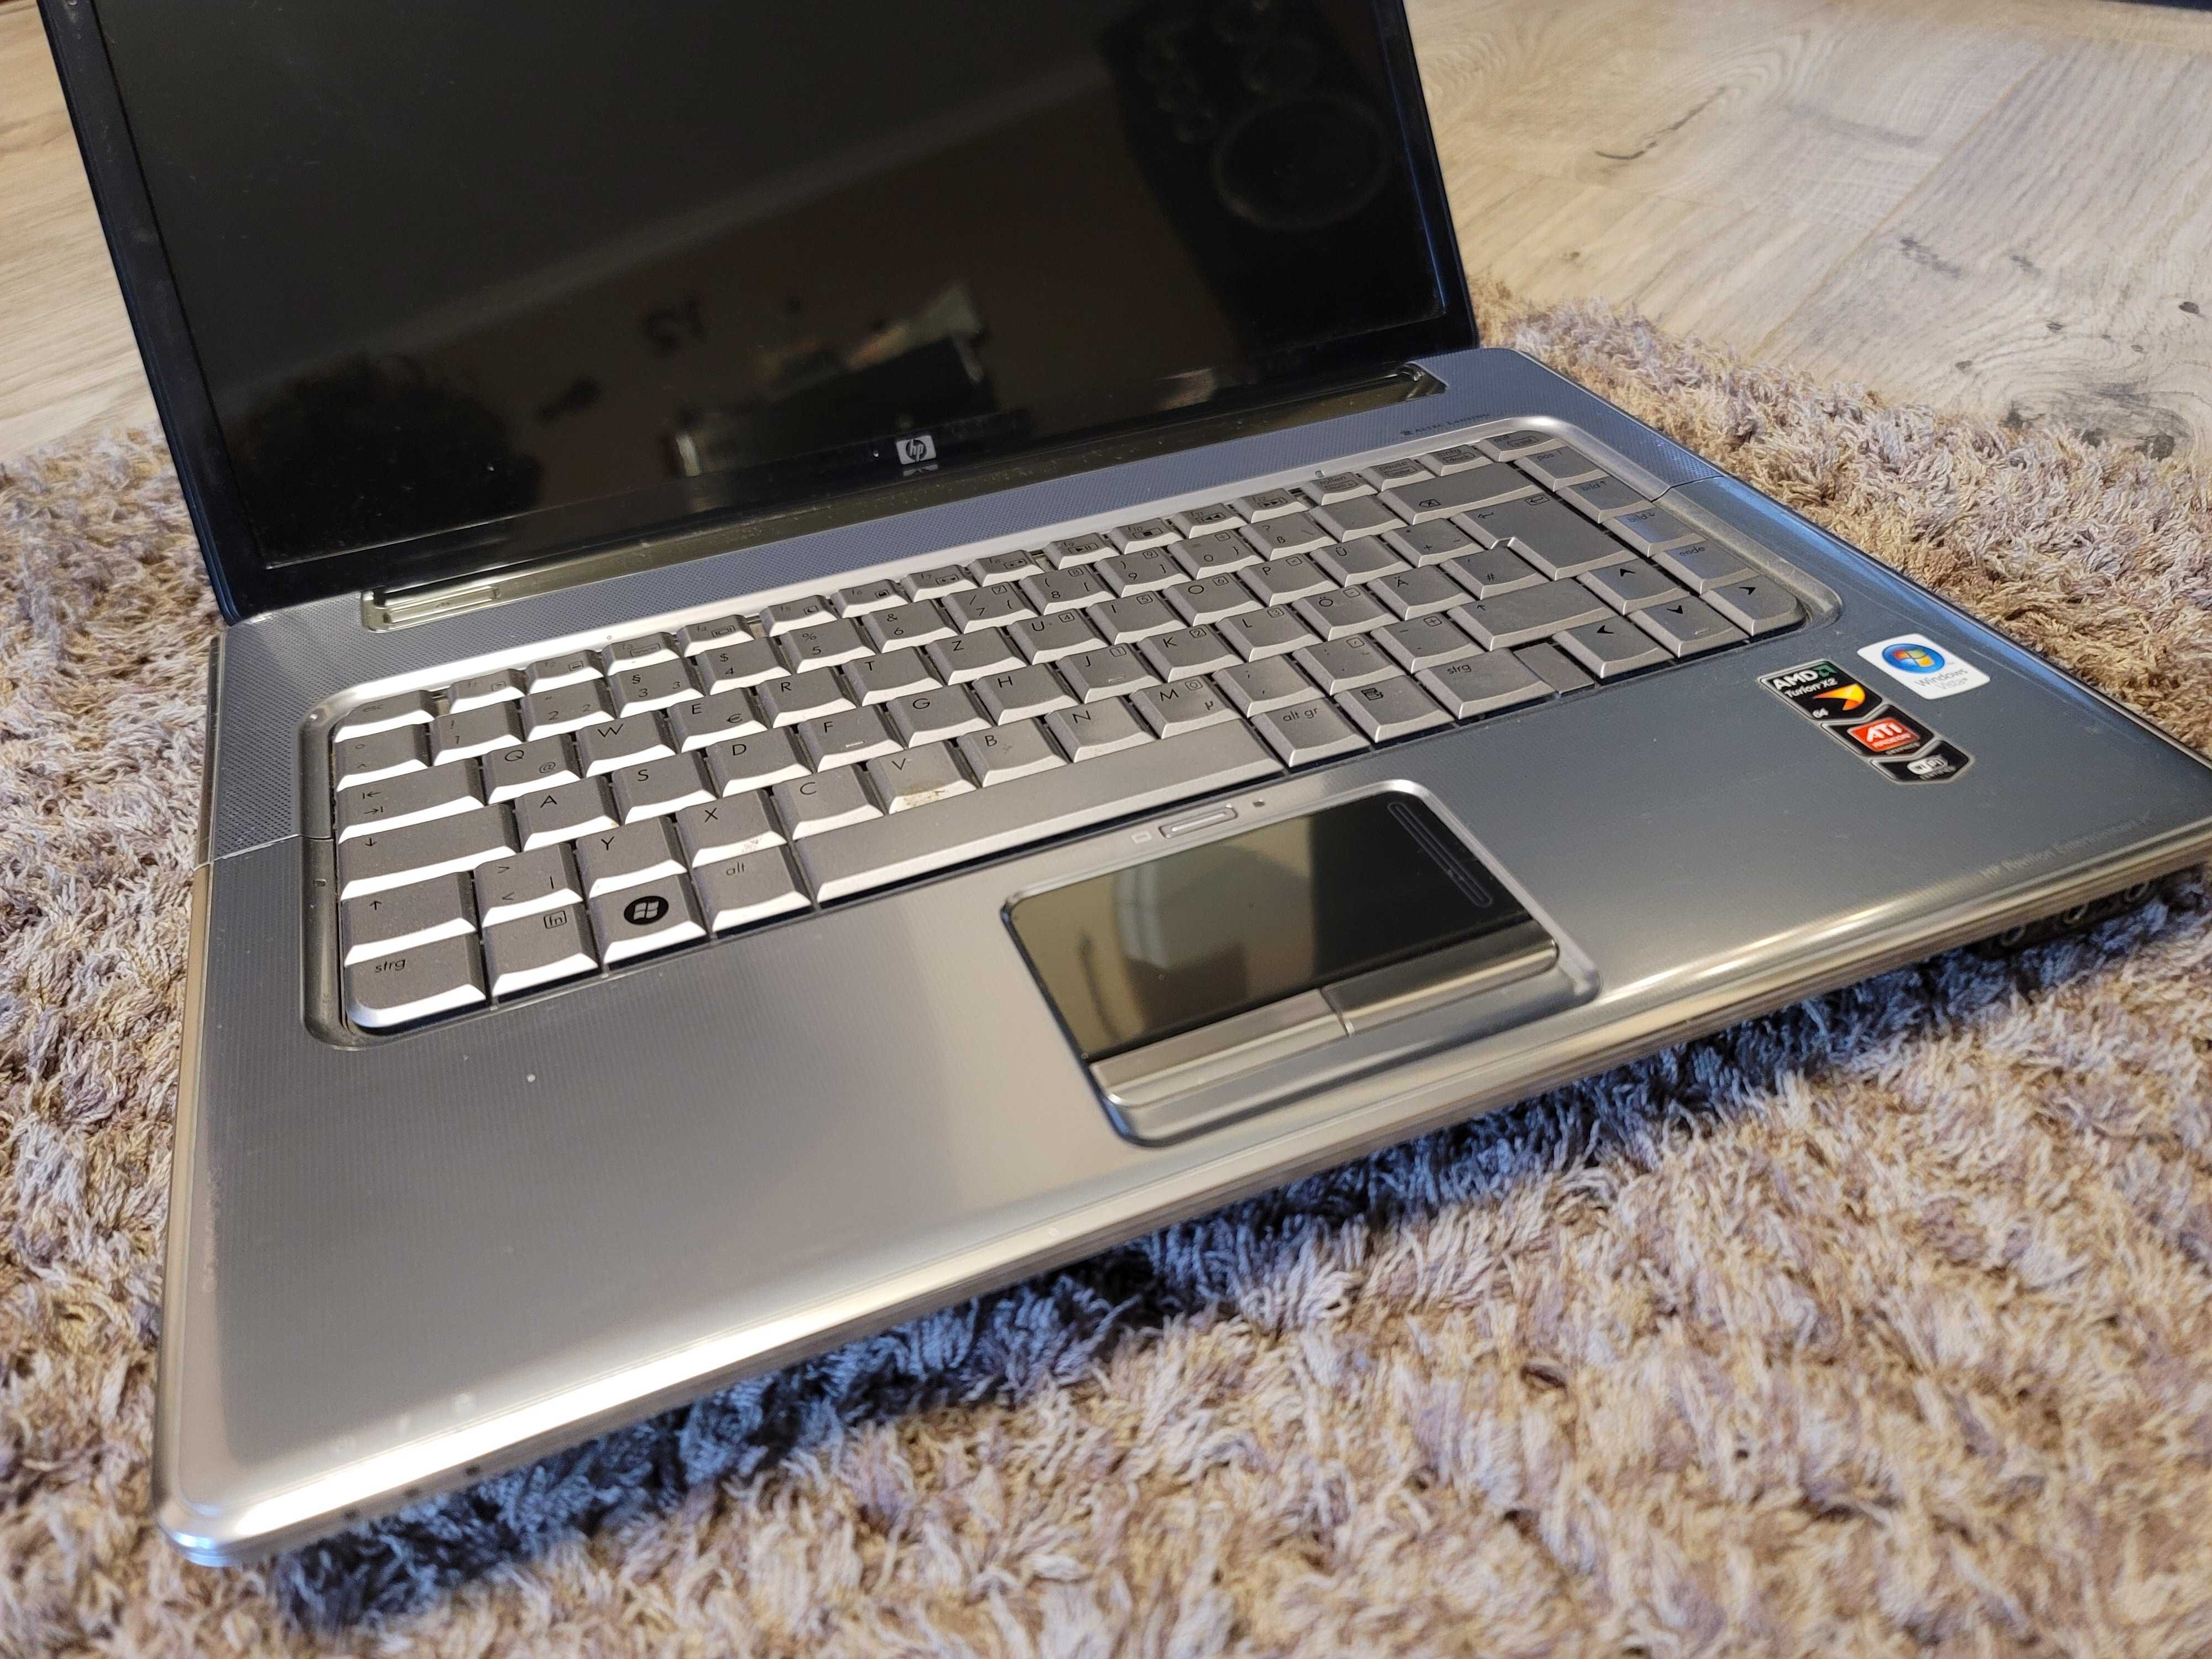 Laptop HP DV5 Defect , vechi retro